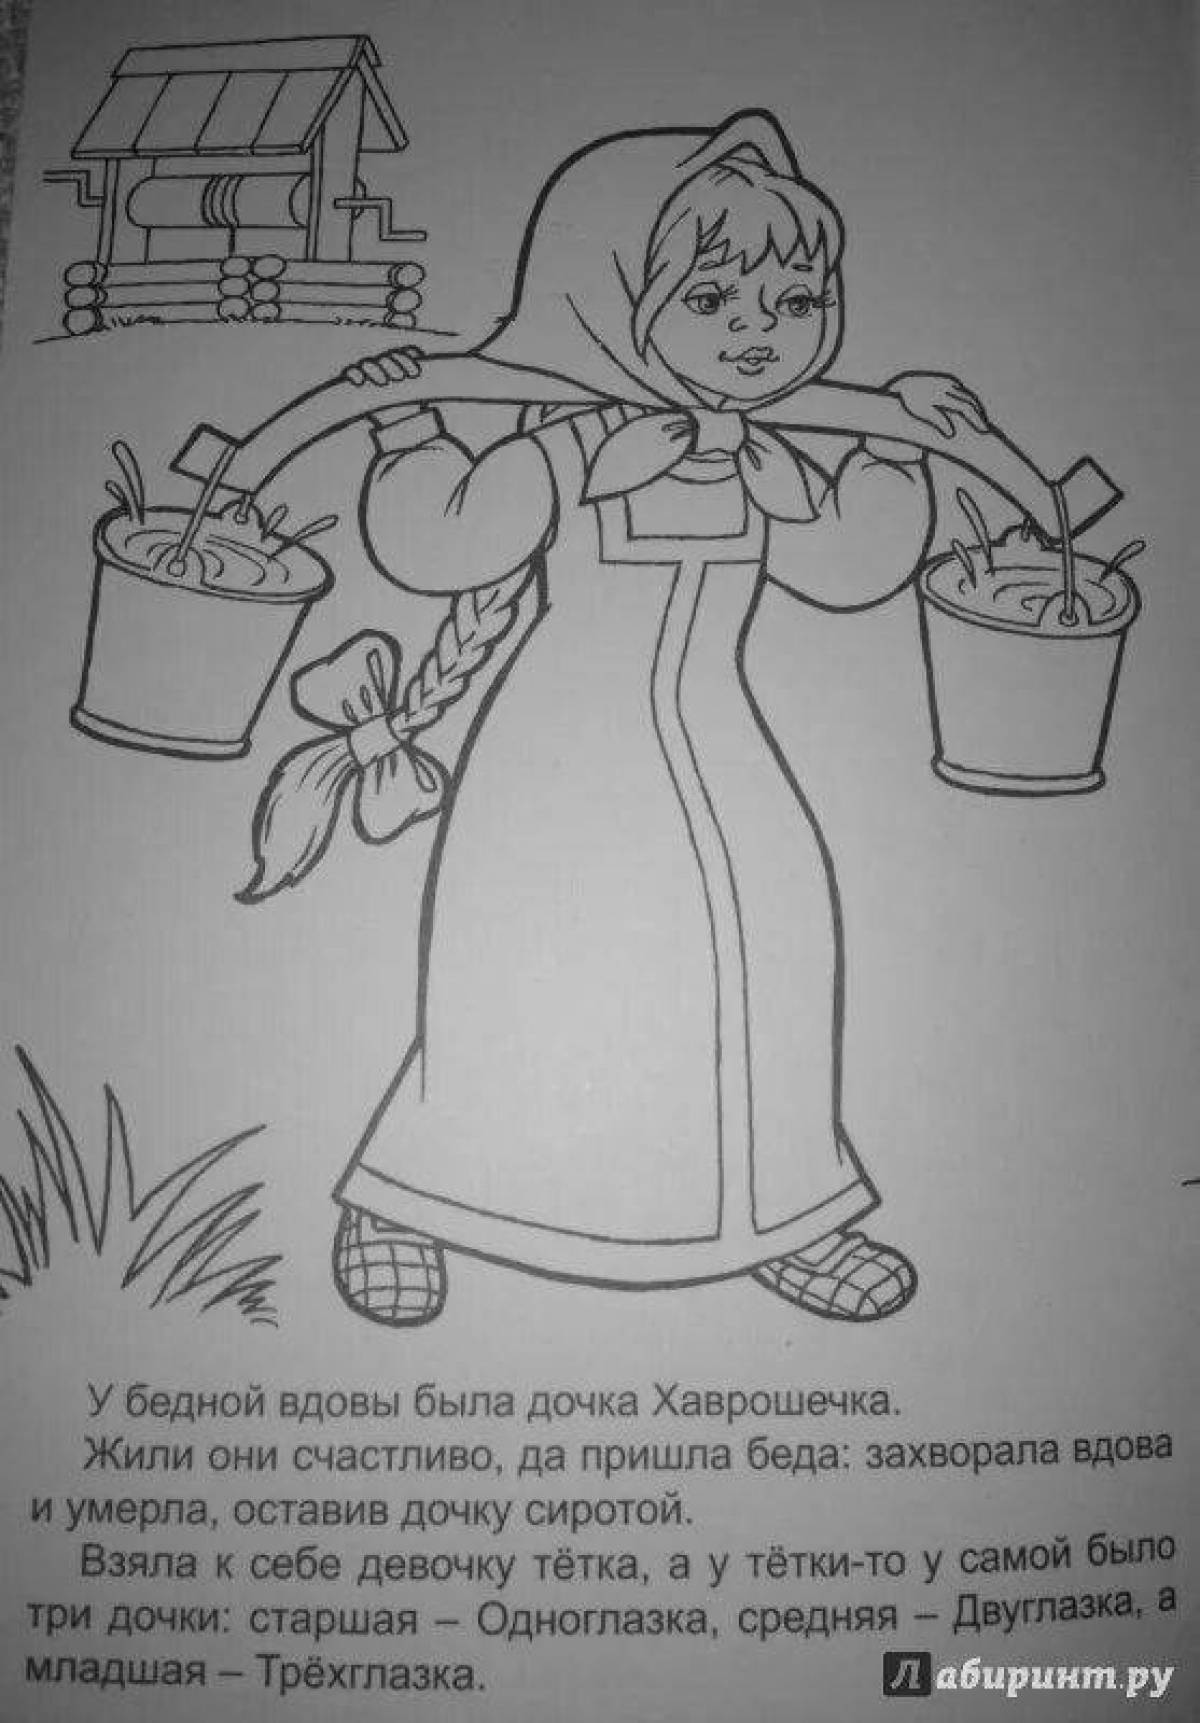 Royal coloring Moroz Ivanovich needlewoman and sloth